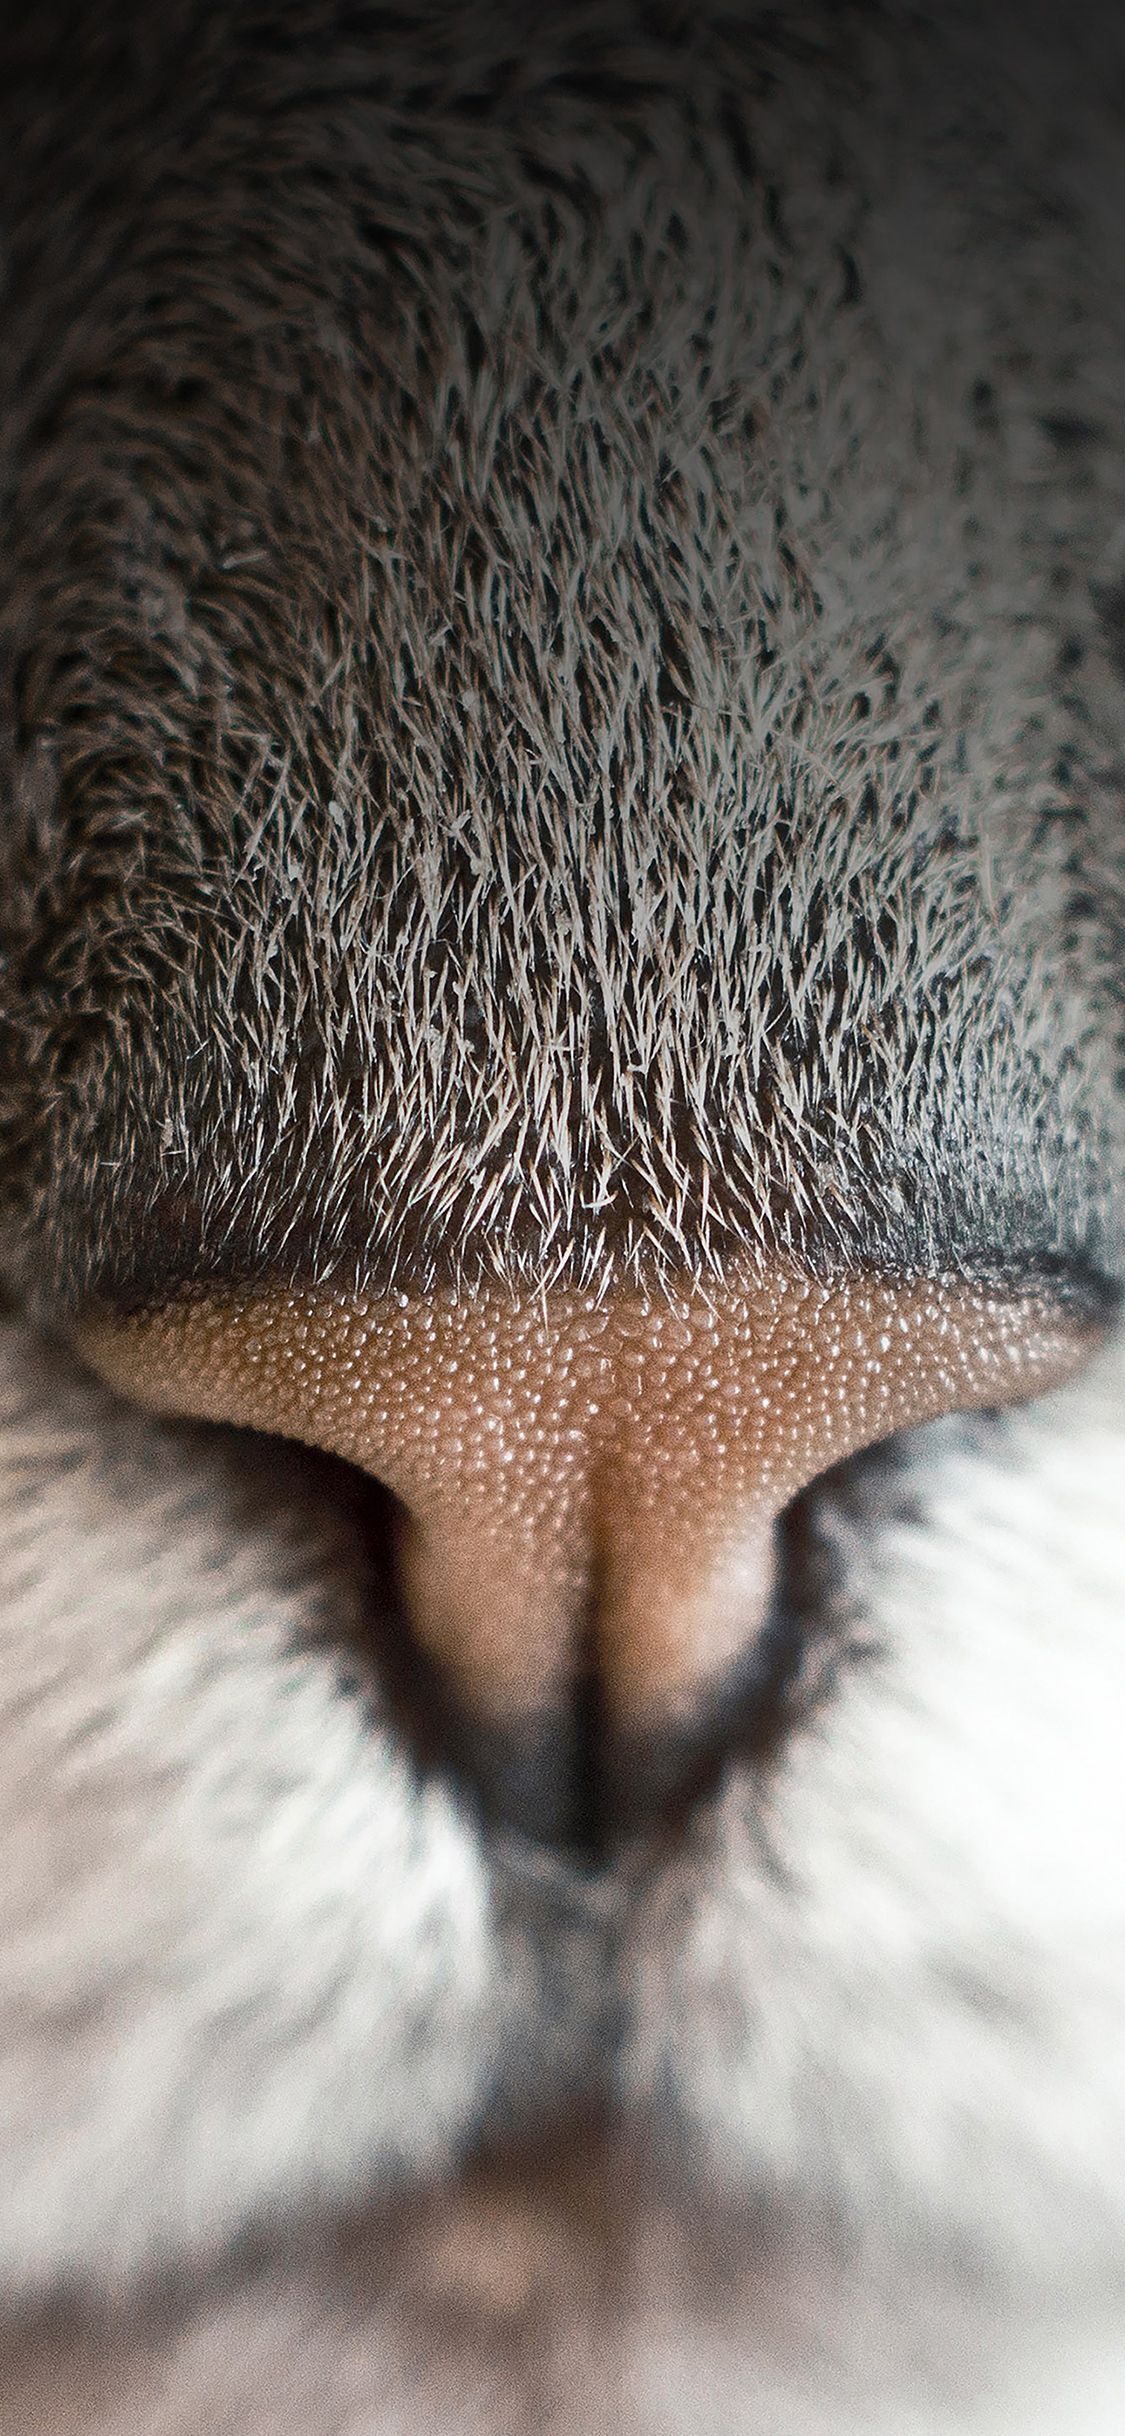 Cat nose close up iPhone X Wallpaper Free Download